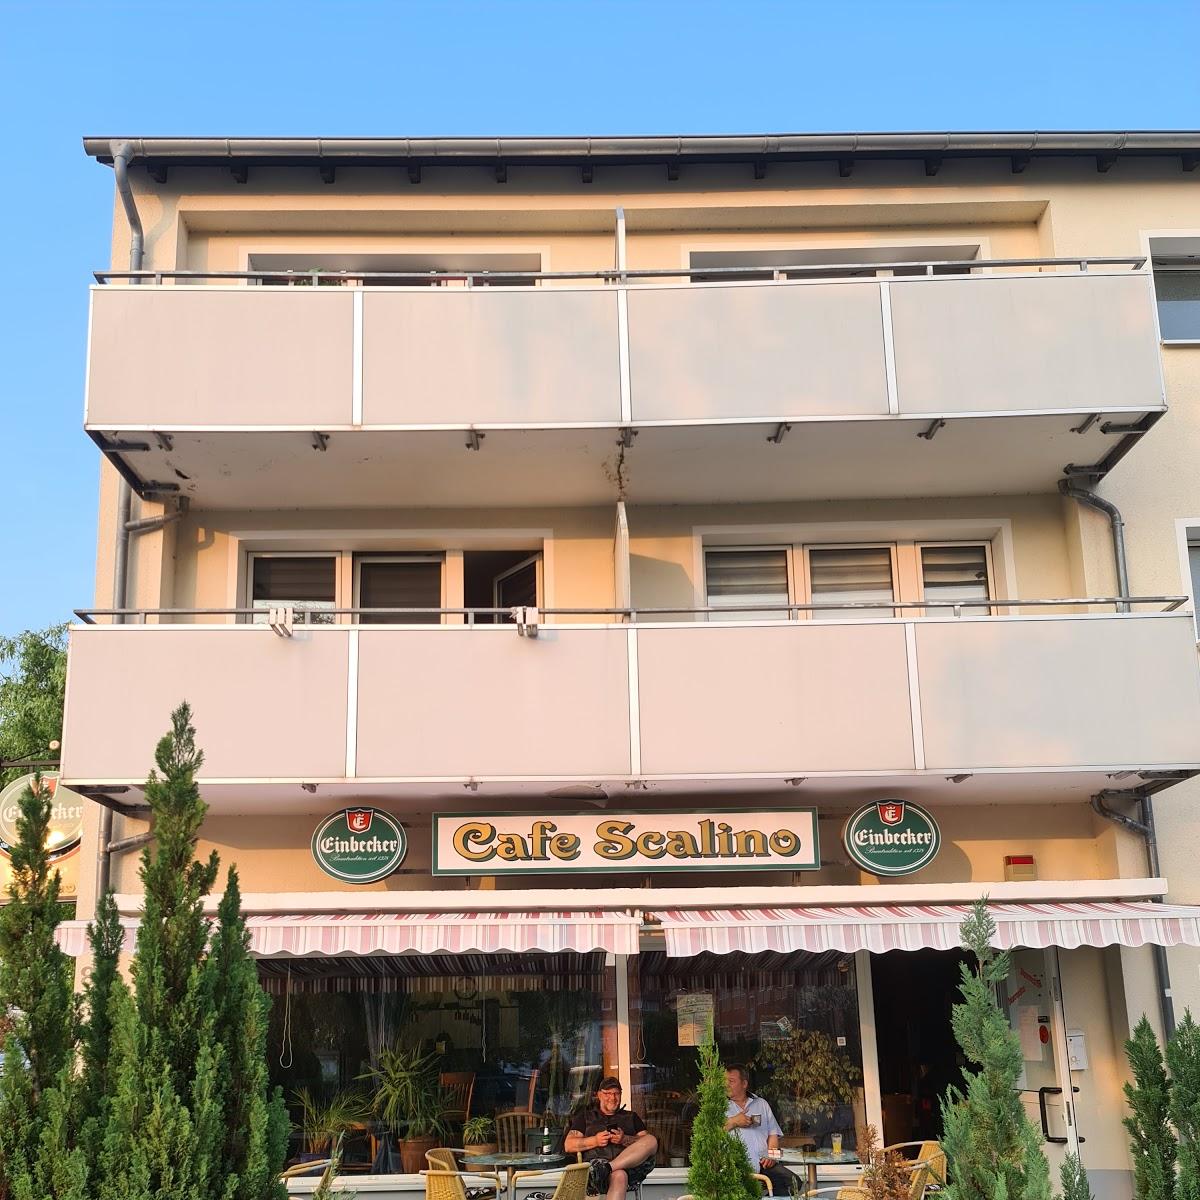 Restaurant "Cafe Scalino" in Gronau (Leine)